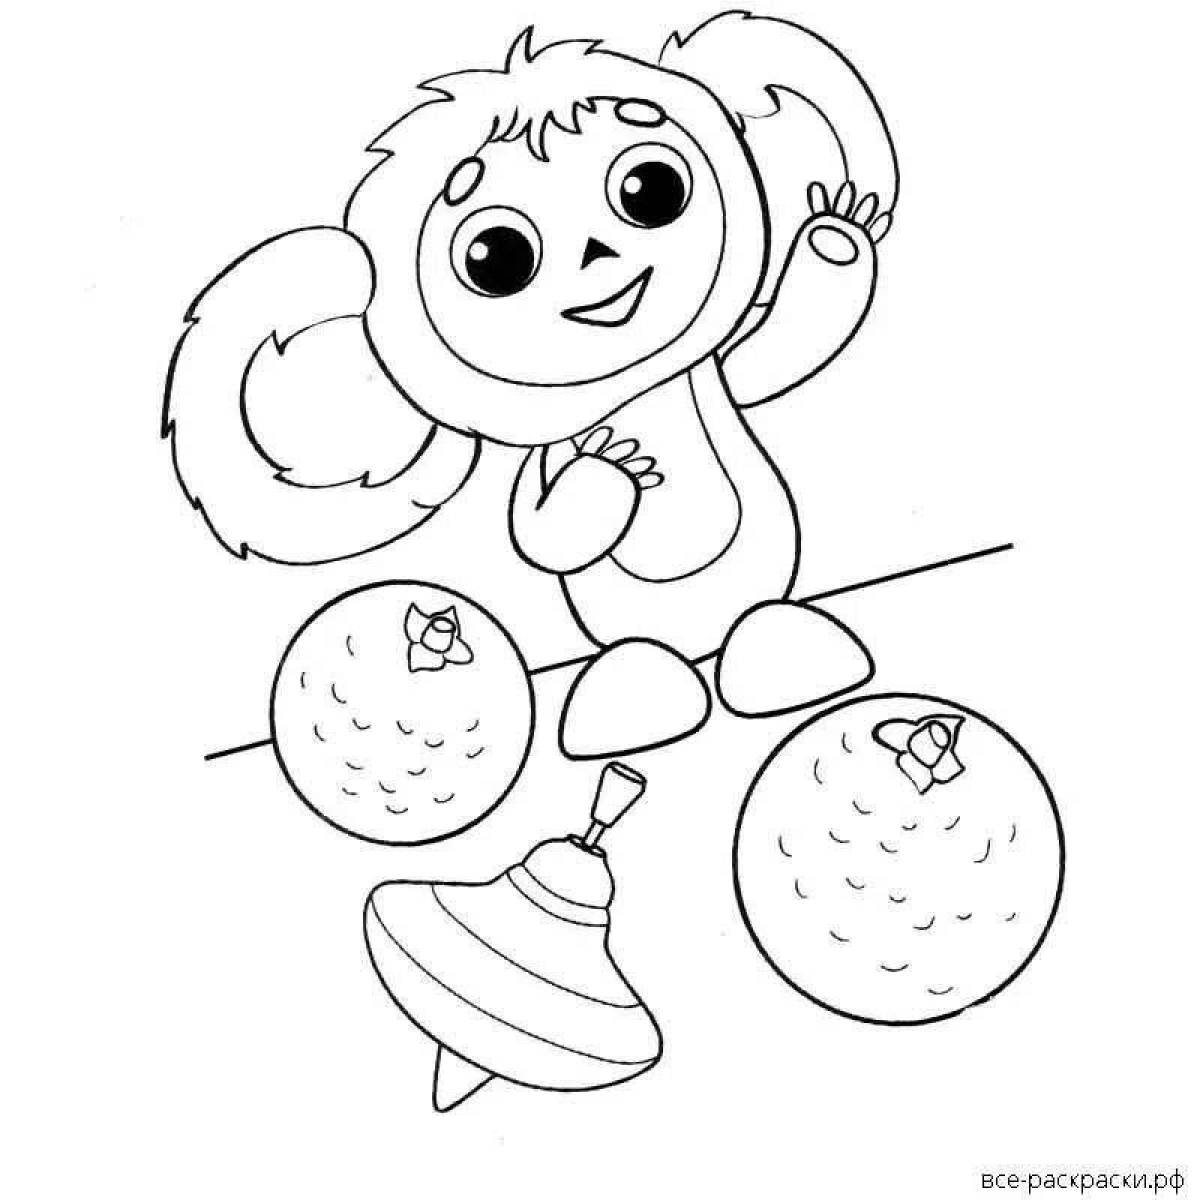 Cheburashka coloring page for pre-k